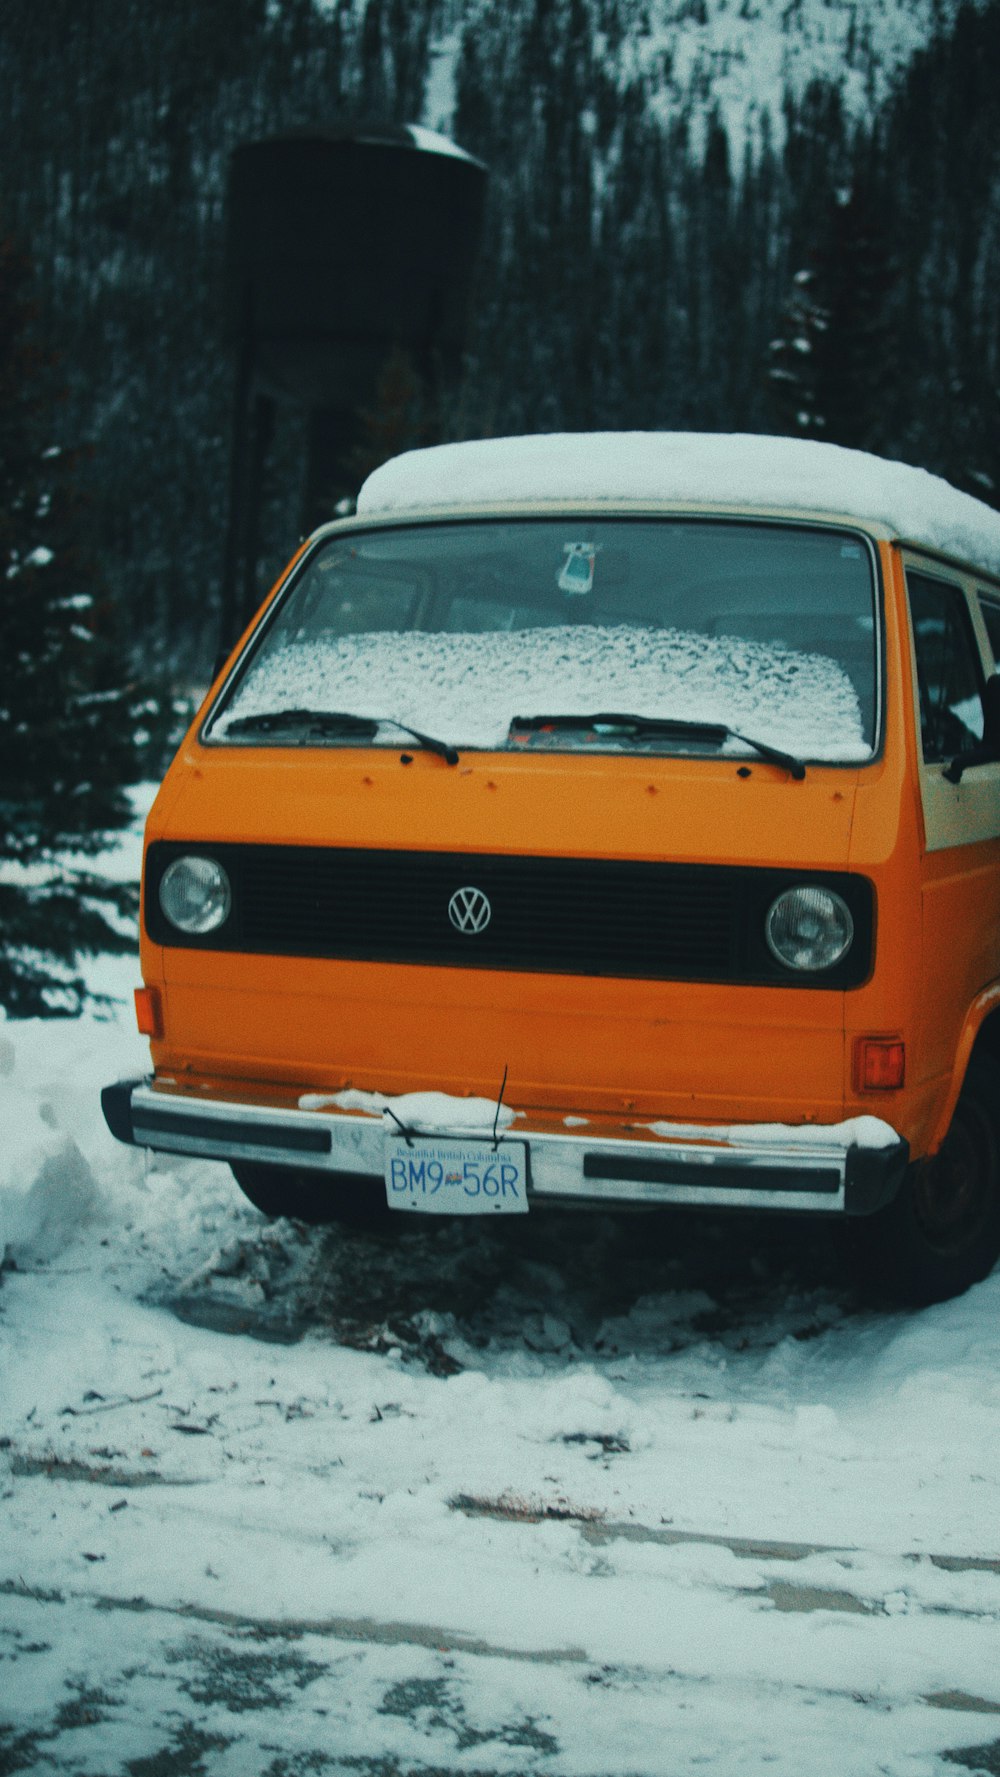 furgoneta Volkswagen naranja y blanca